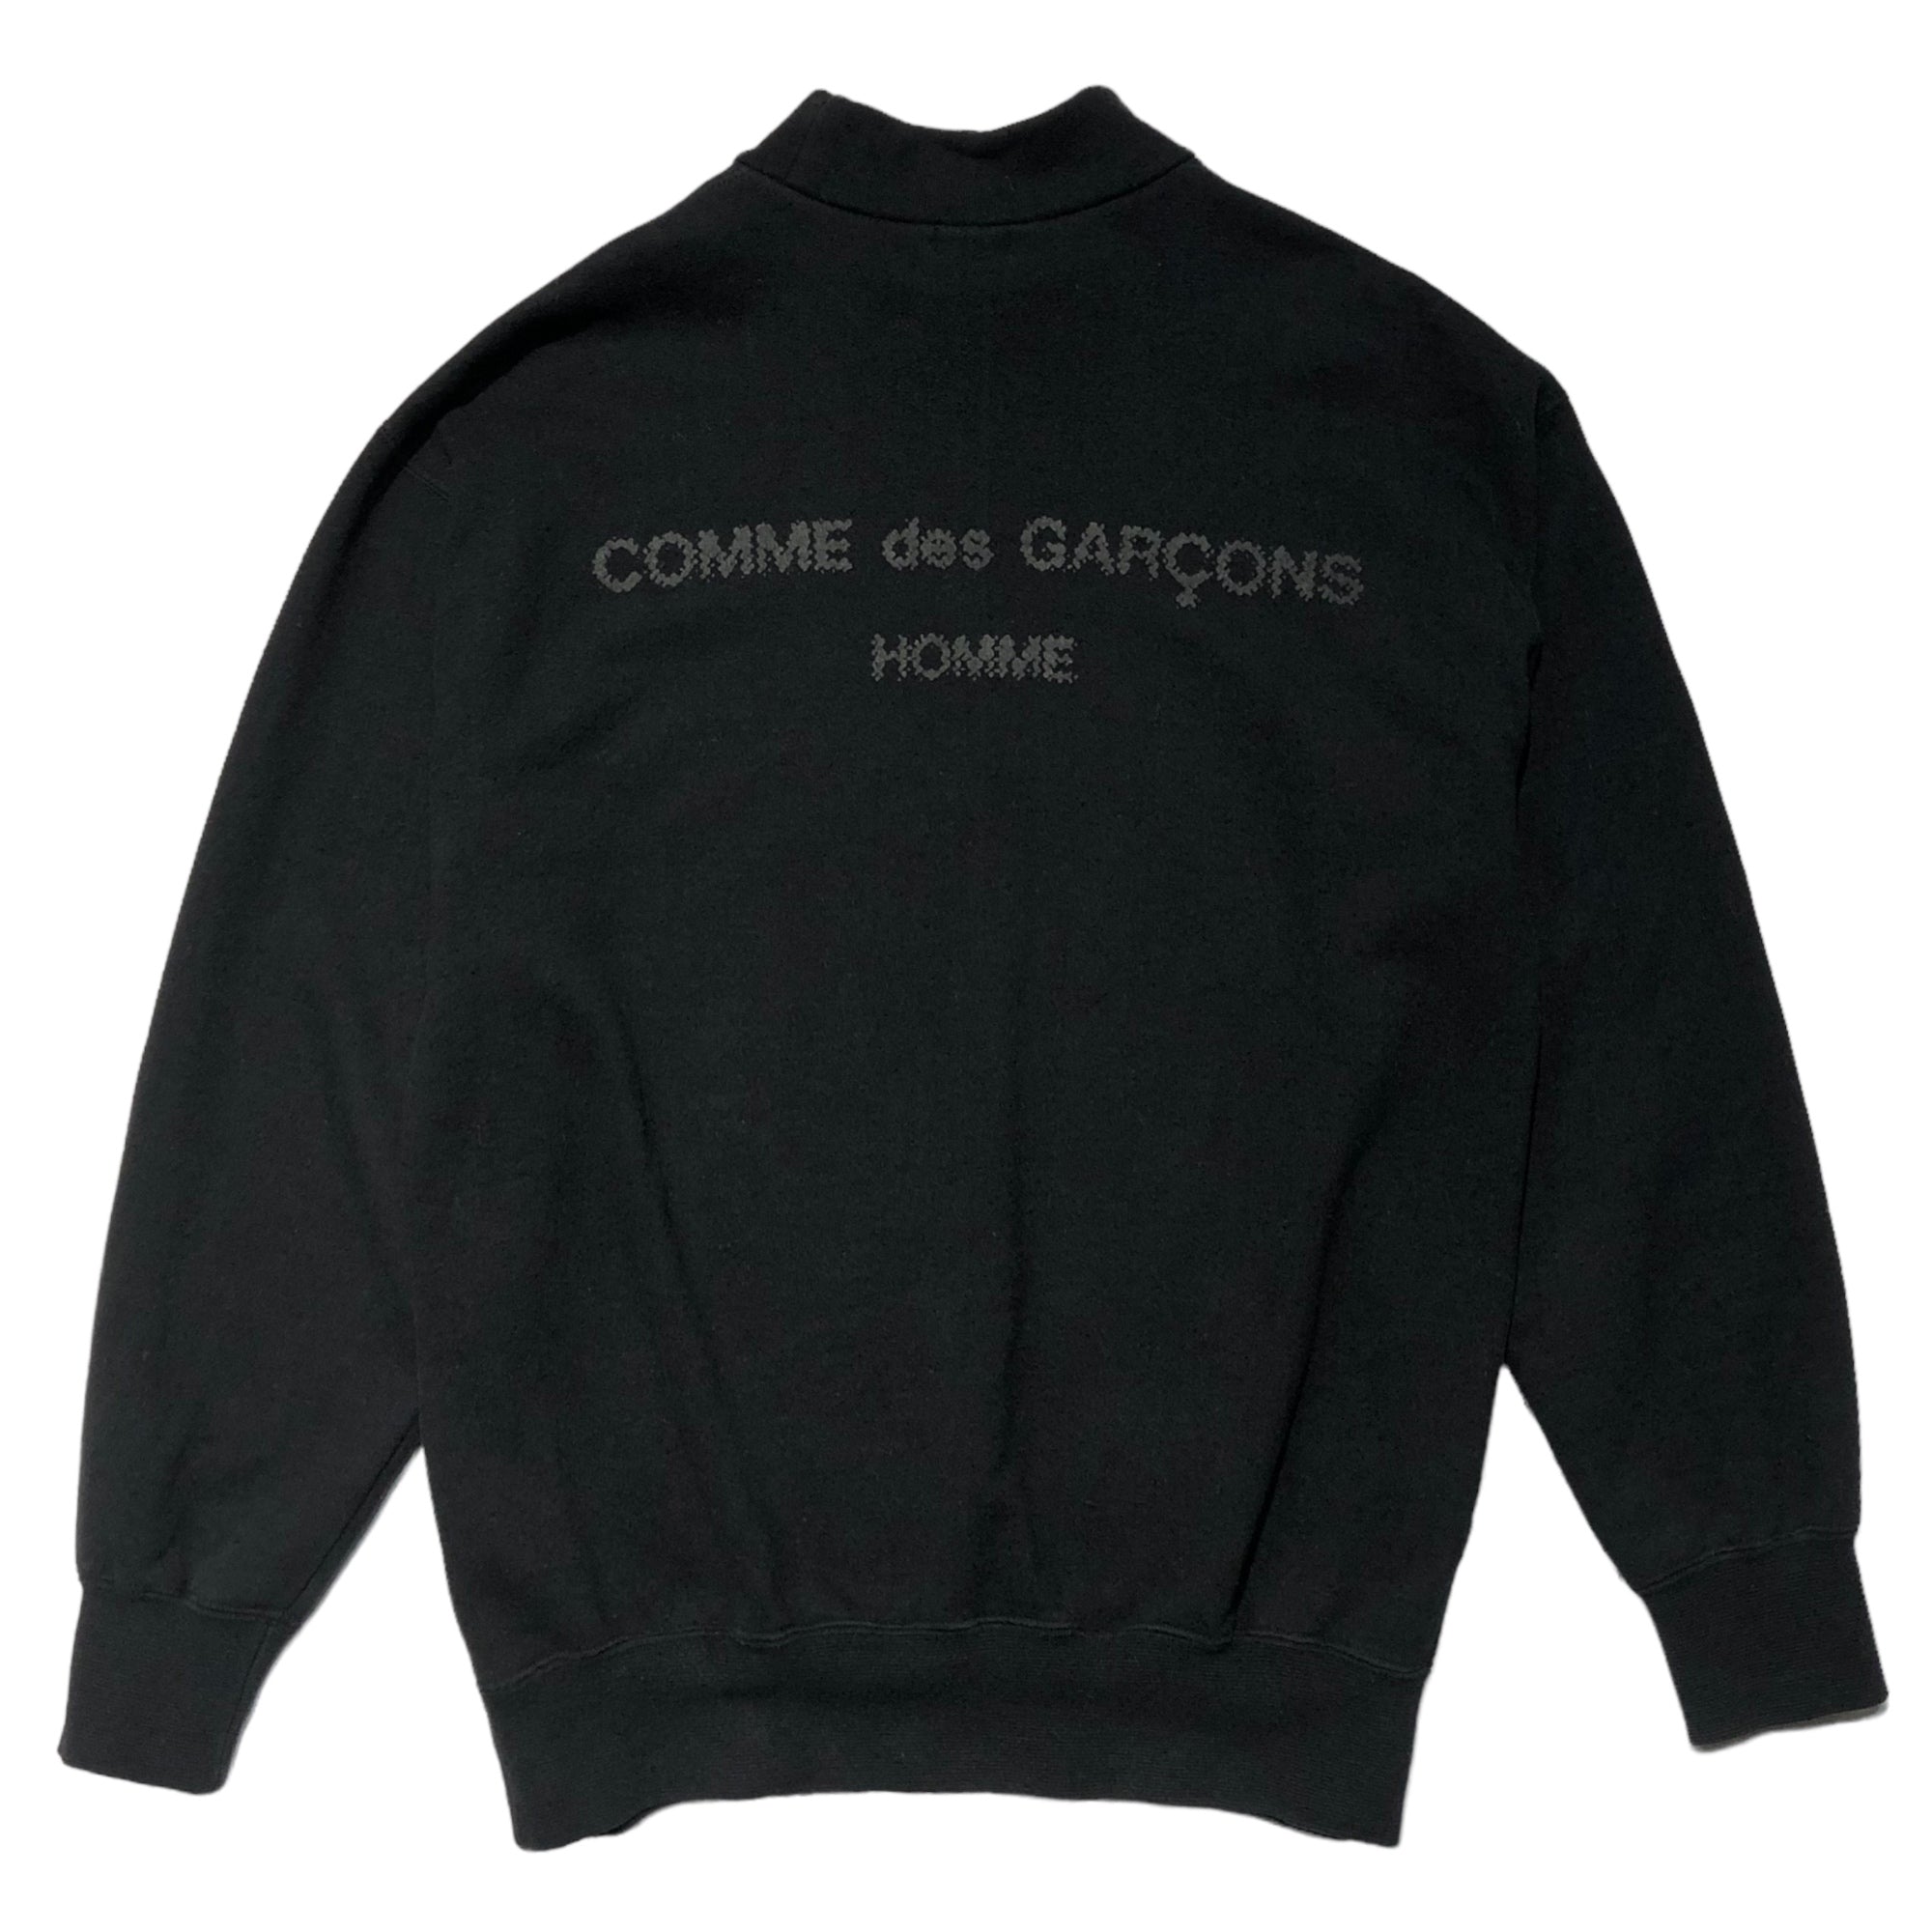 COMME des GARCONS HOMME(コムデギャルソンオム) 90's  Back logo mock neck sweatshirt バック ロゴ モック ネック スウェット 田中オム HT-080230 表記無し(M程度) ブラック AD1991